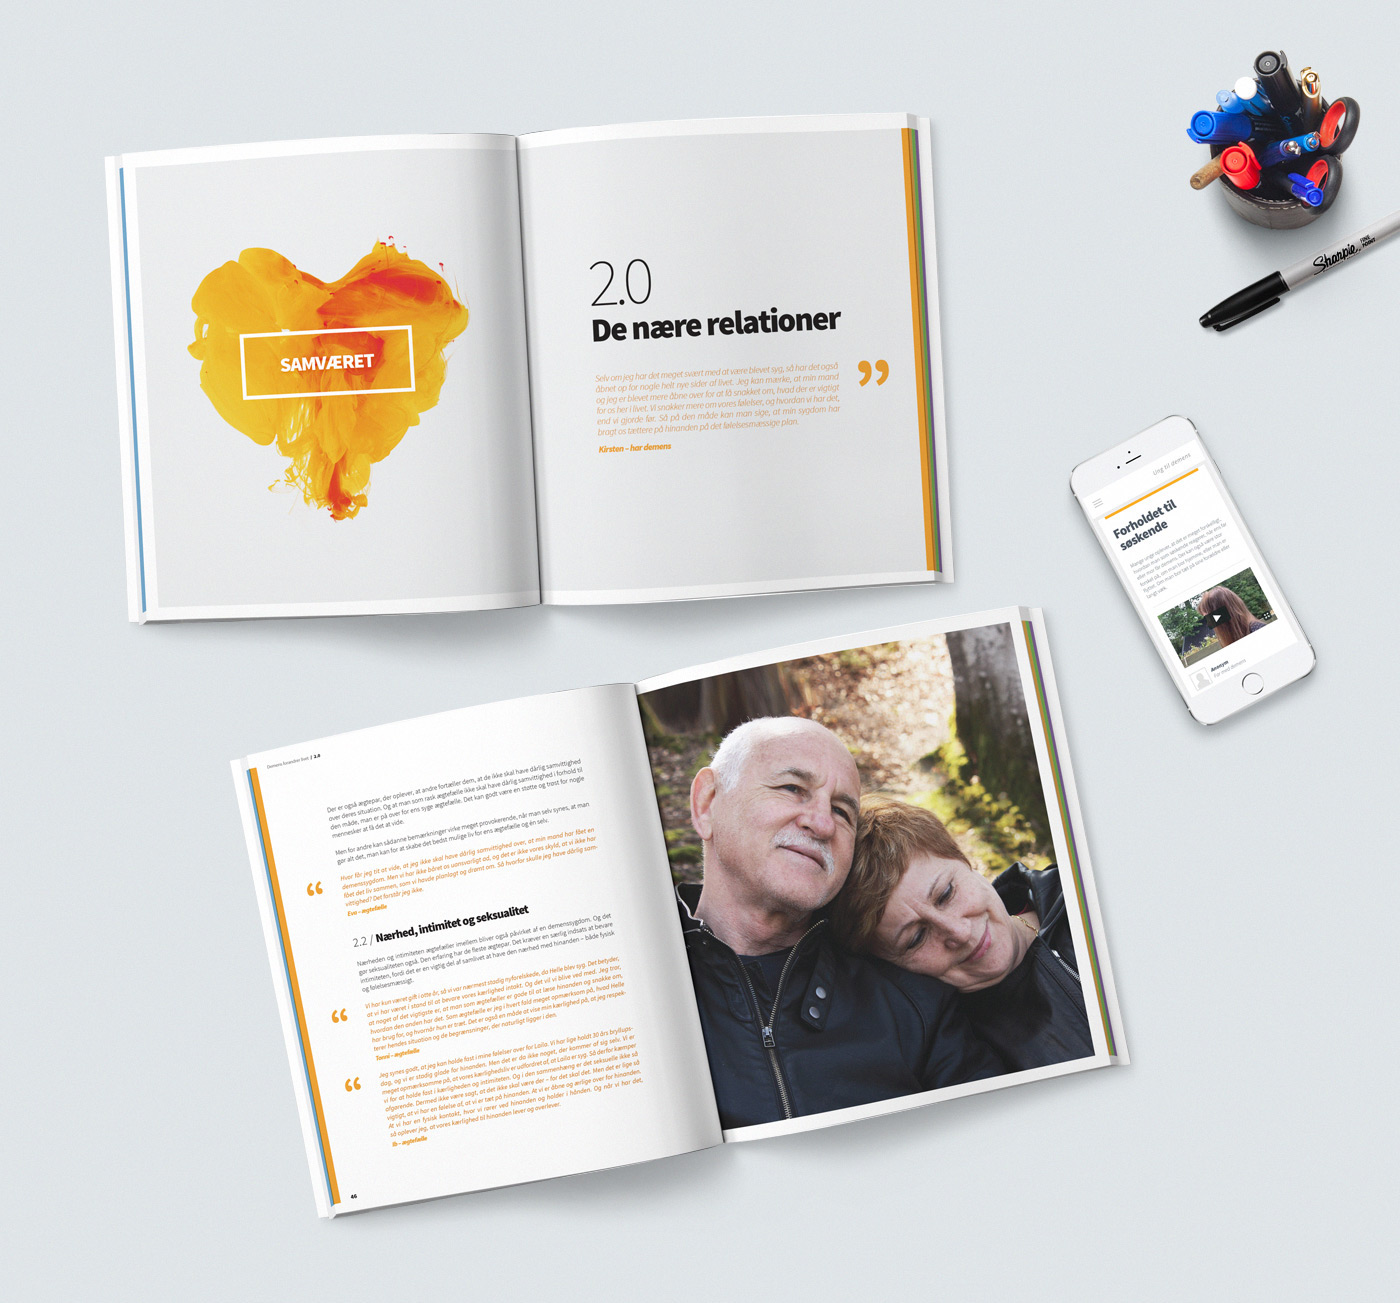 dementia alzheimers demens book app Website danish design graphic voight